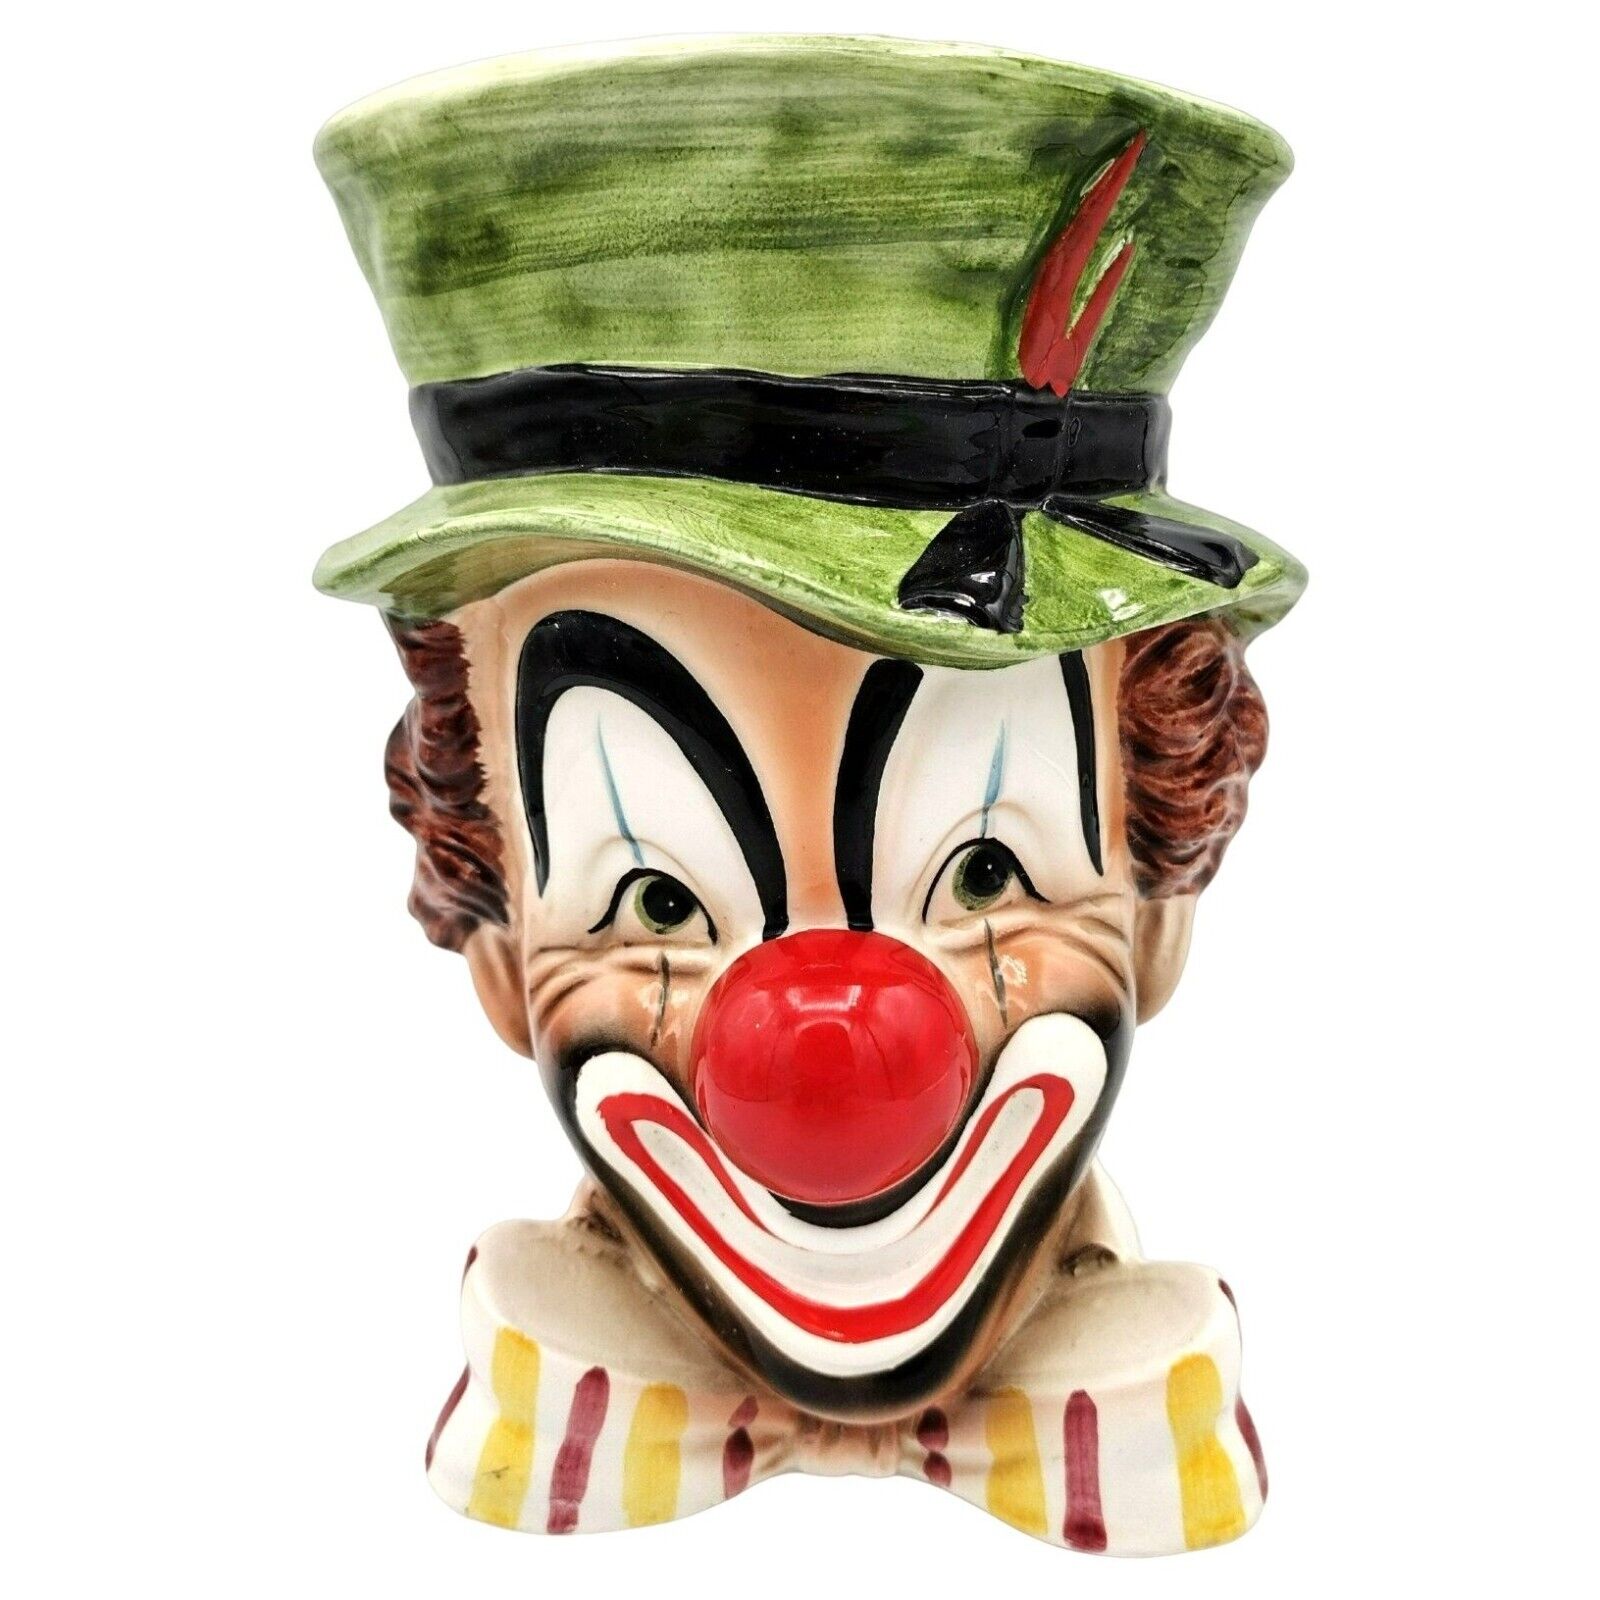 Clown Planter Samson Import 1965 Relpo Vintage Green Hat 7.5 Inch Fun Decor